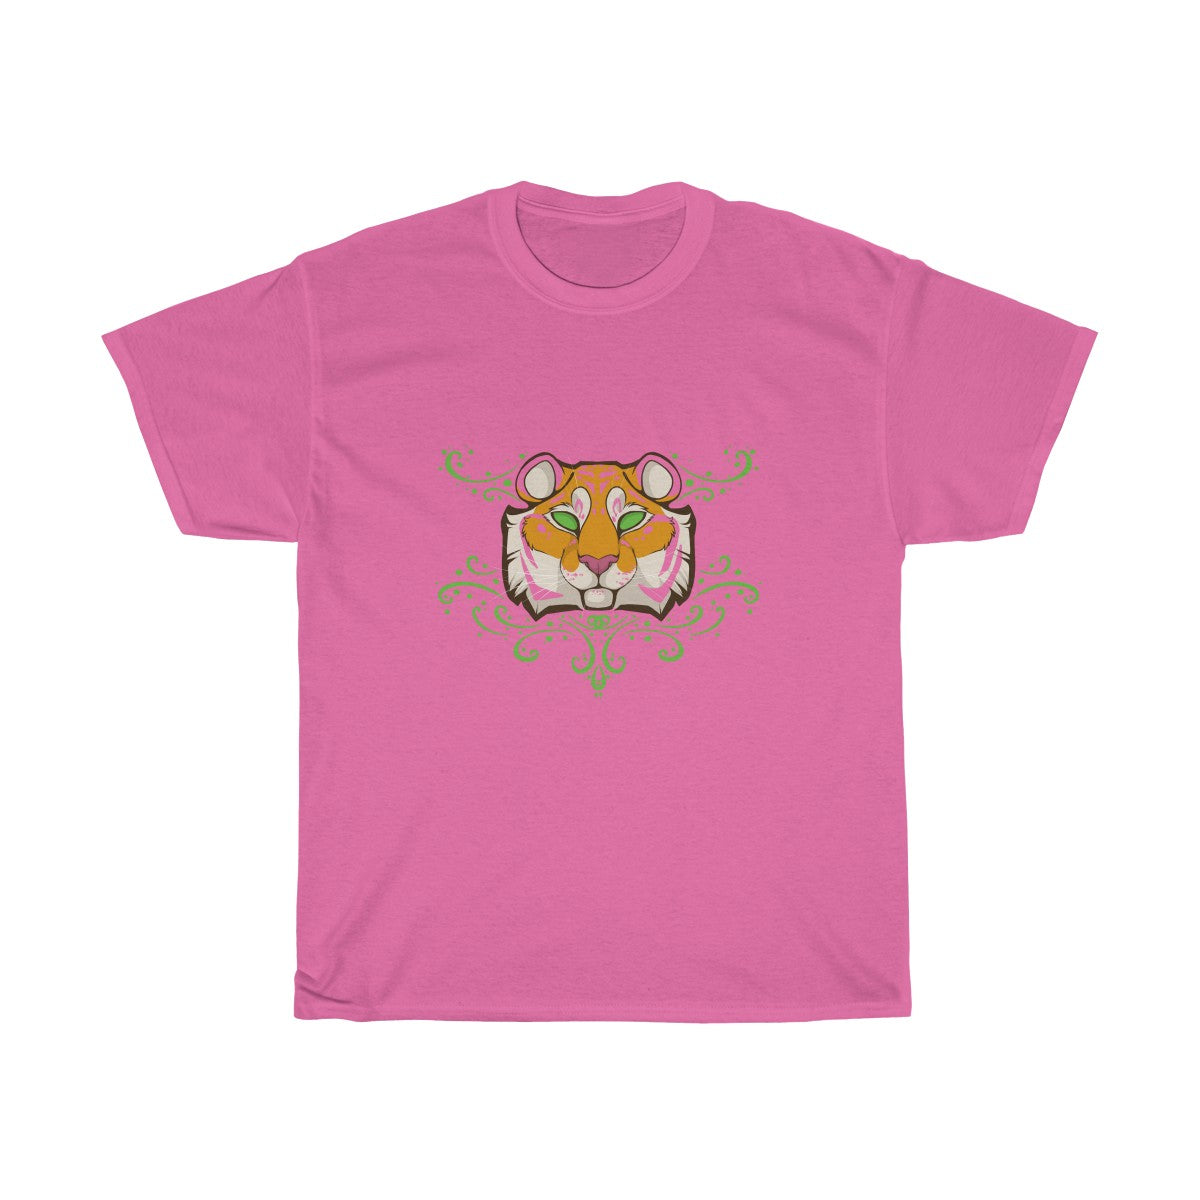 Tiger - T-Shirt T-Shirt Dire Creatures Pink S 